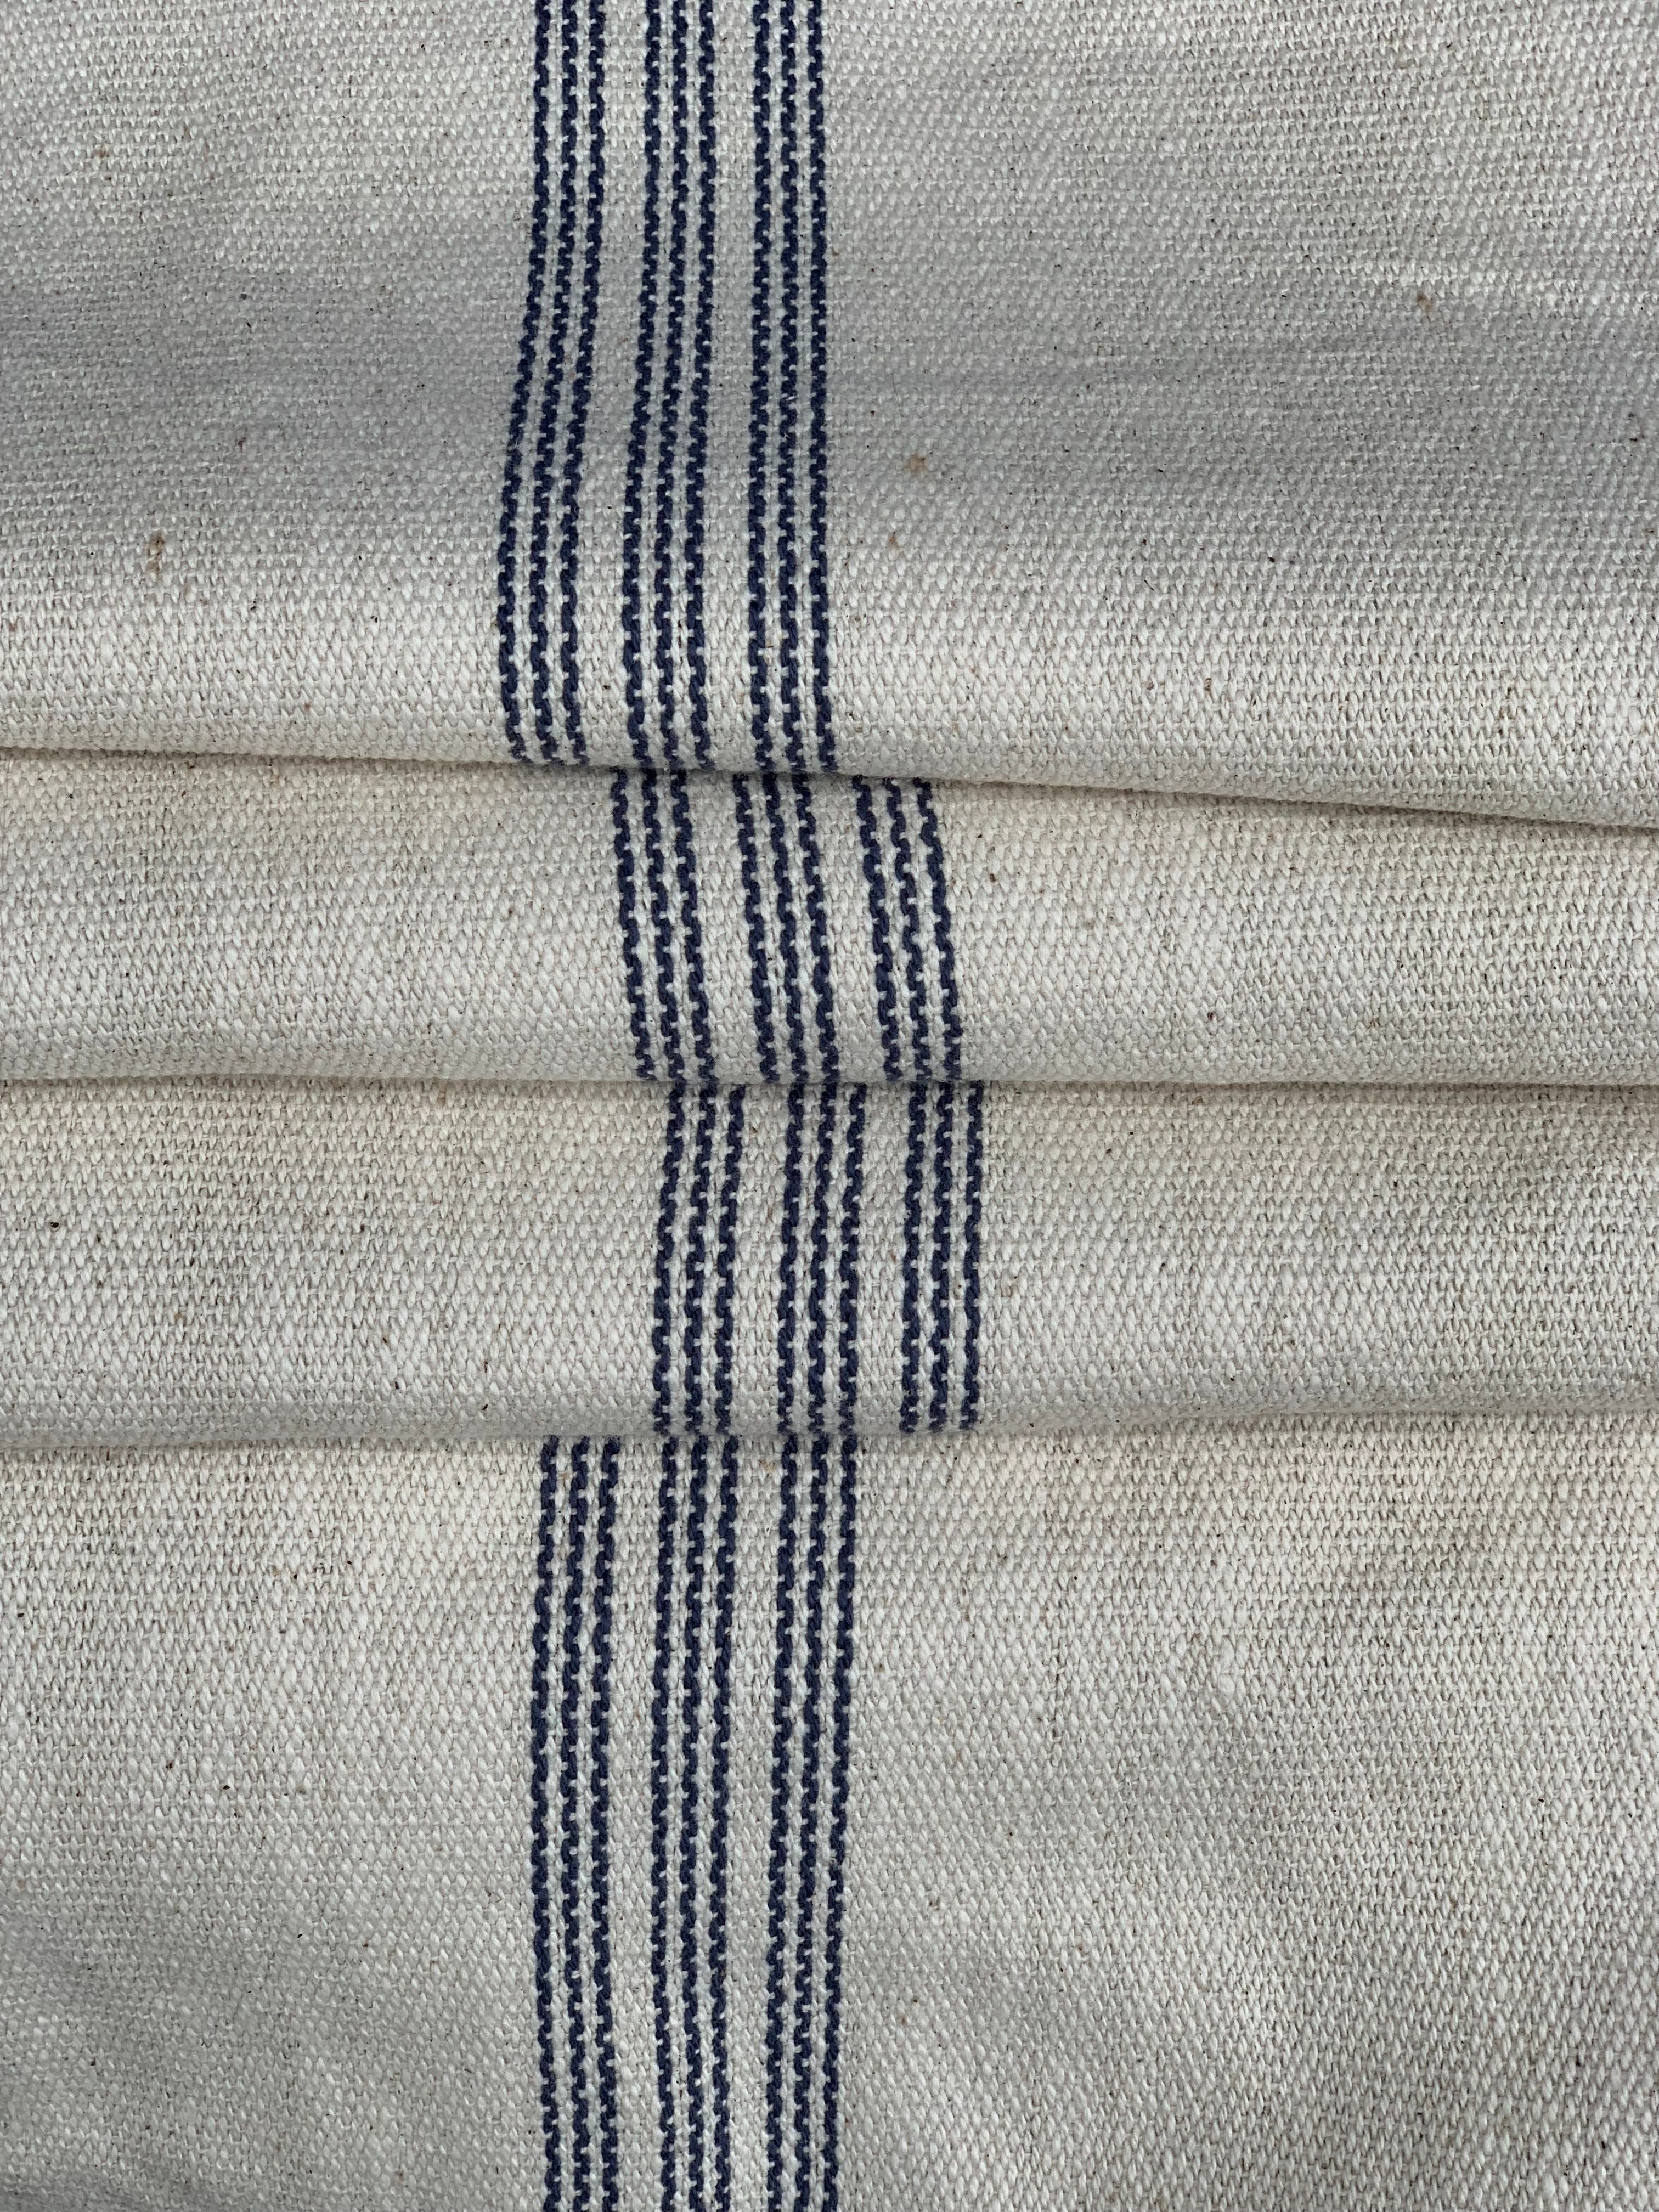 Grain Sack Fabric - Three Set Blue Stripes on Cream